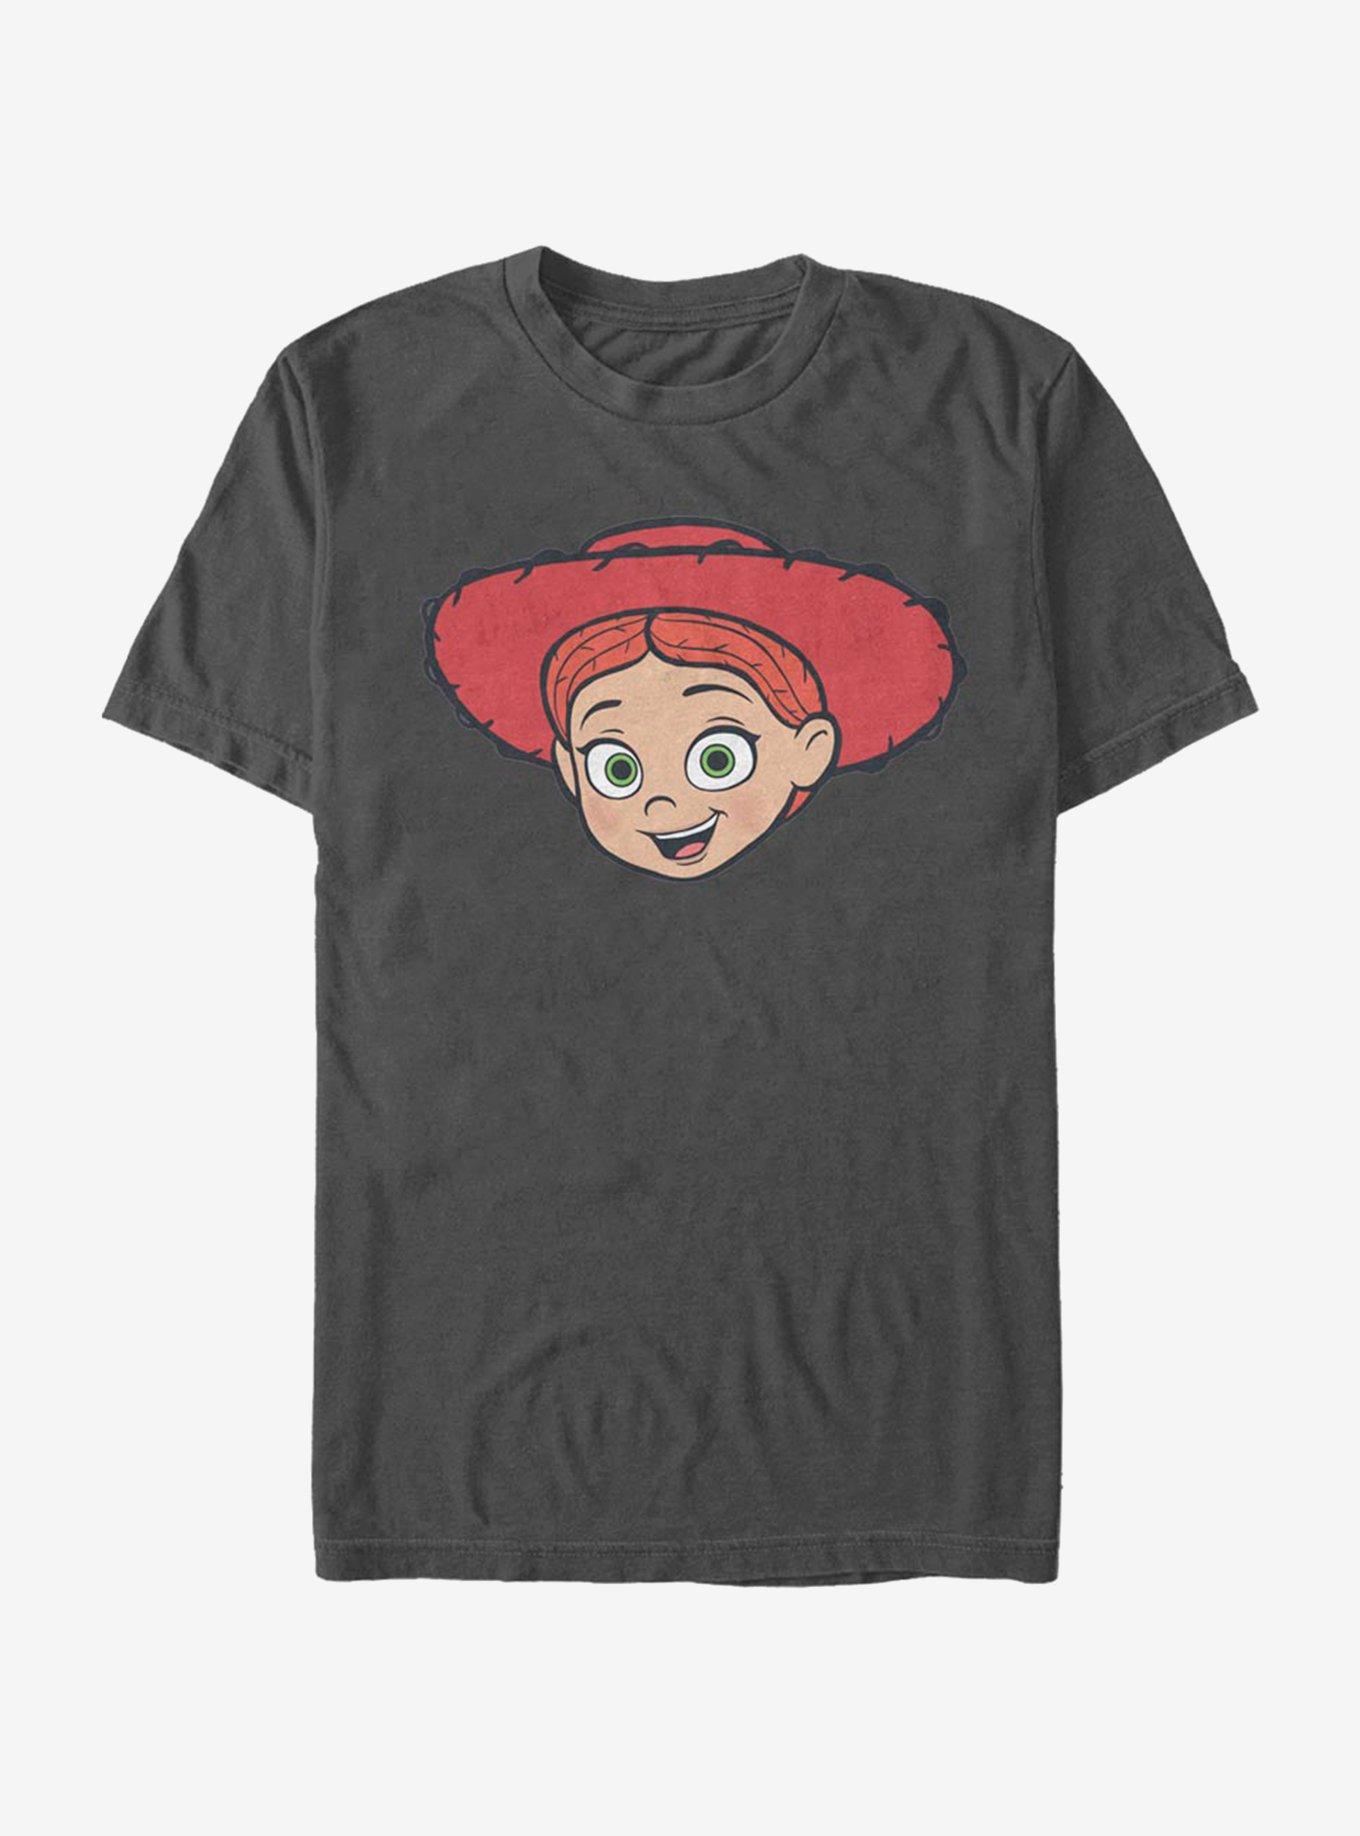 Disney Pixar Toy Story 4 Big Face Jessie T-Shirt